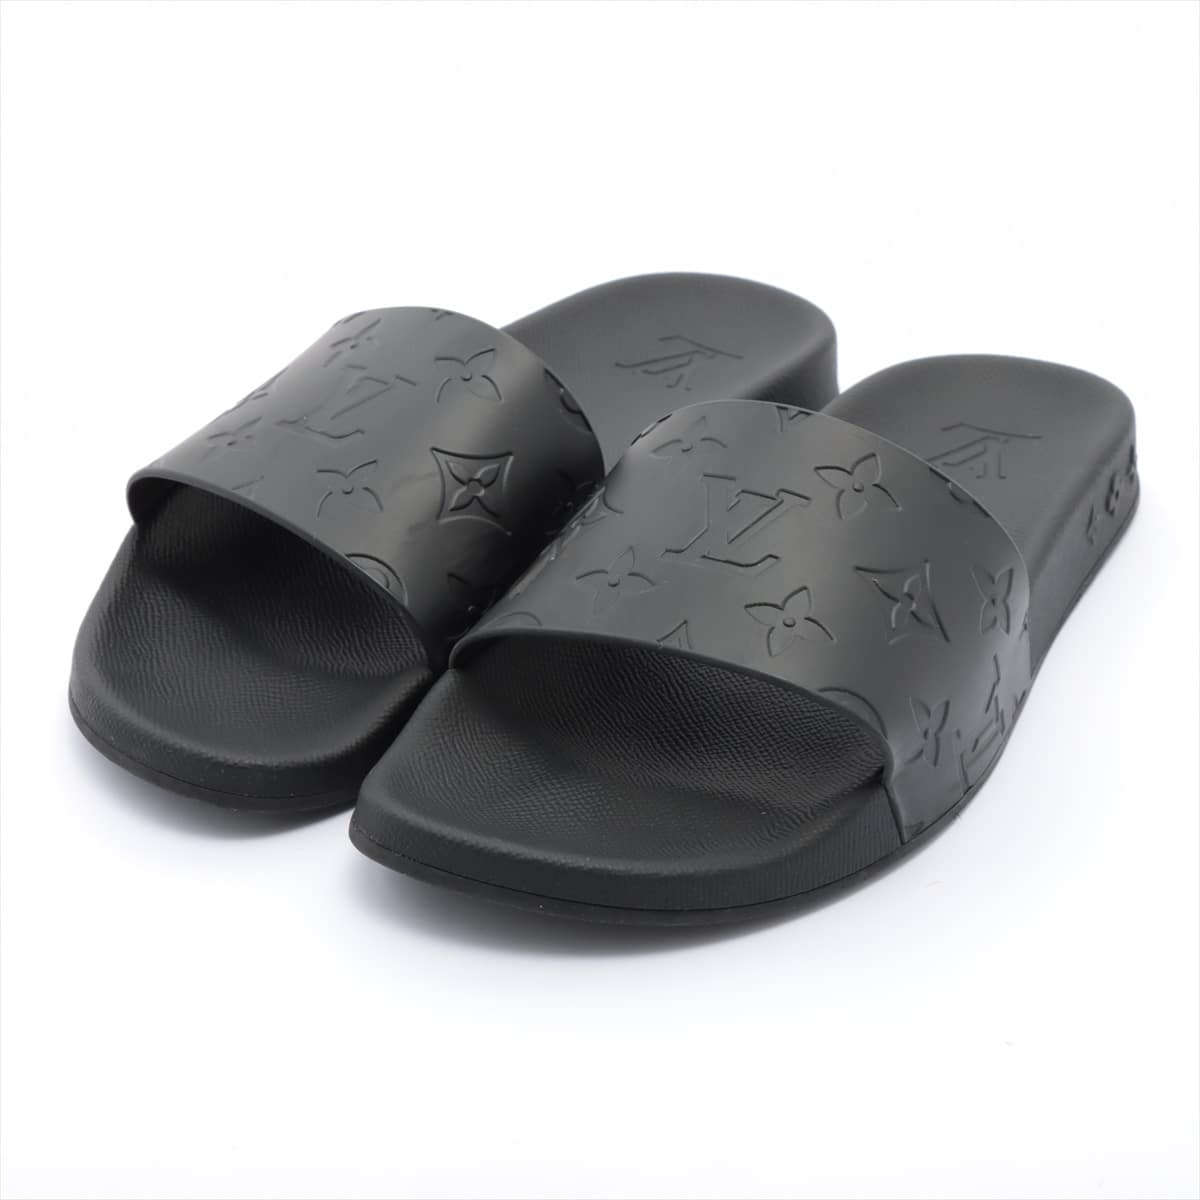 Louis Vuitton Waterfront line 21 years Rubber Sandals 6 Unisex Black Monogram VS0211 embossing